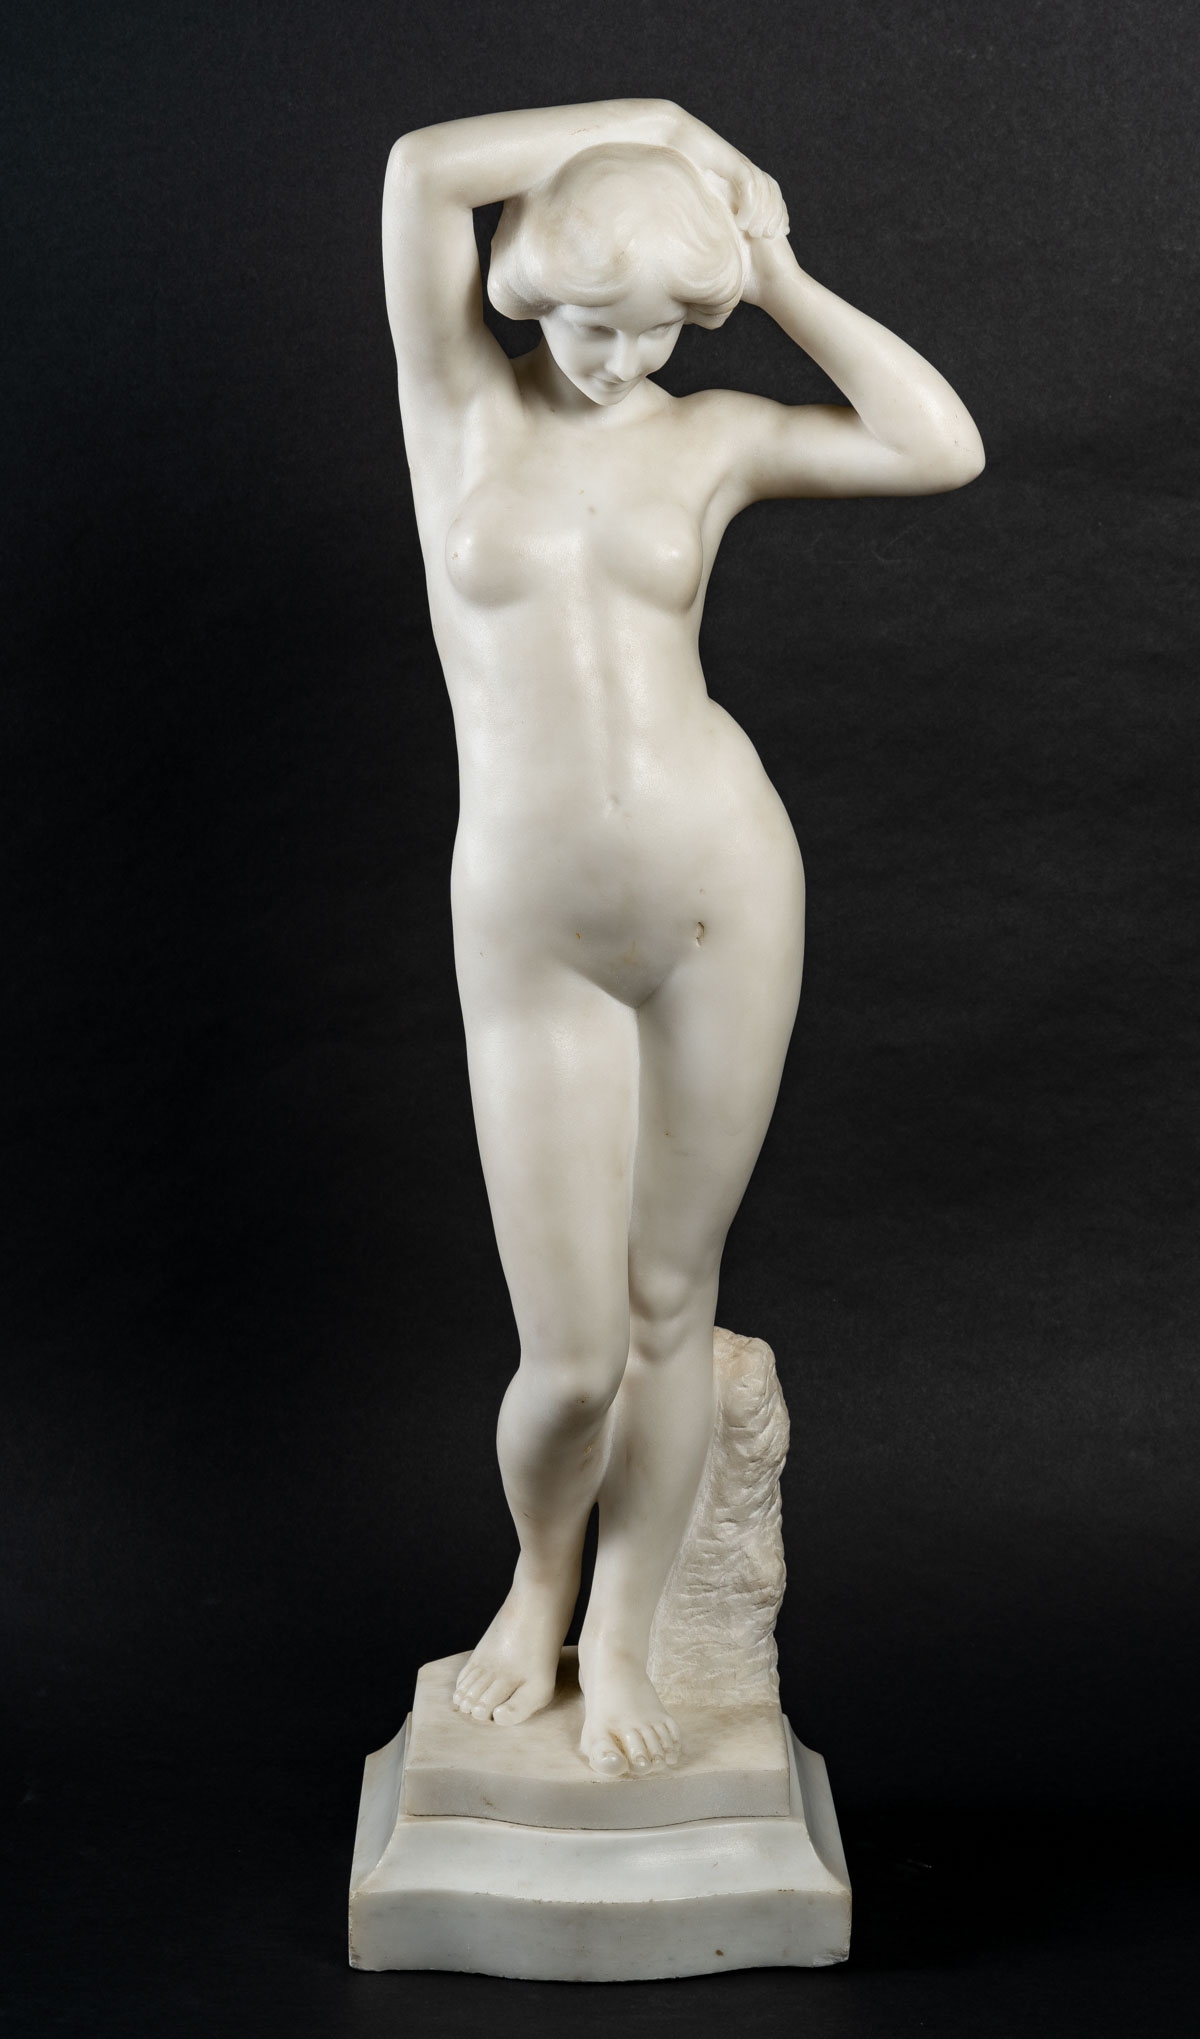 Large Desnudo Sculptures